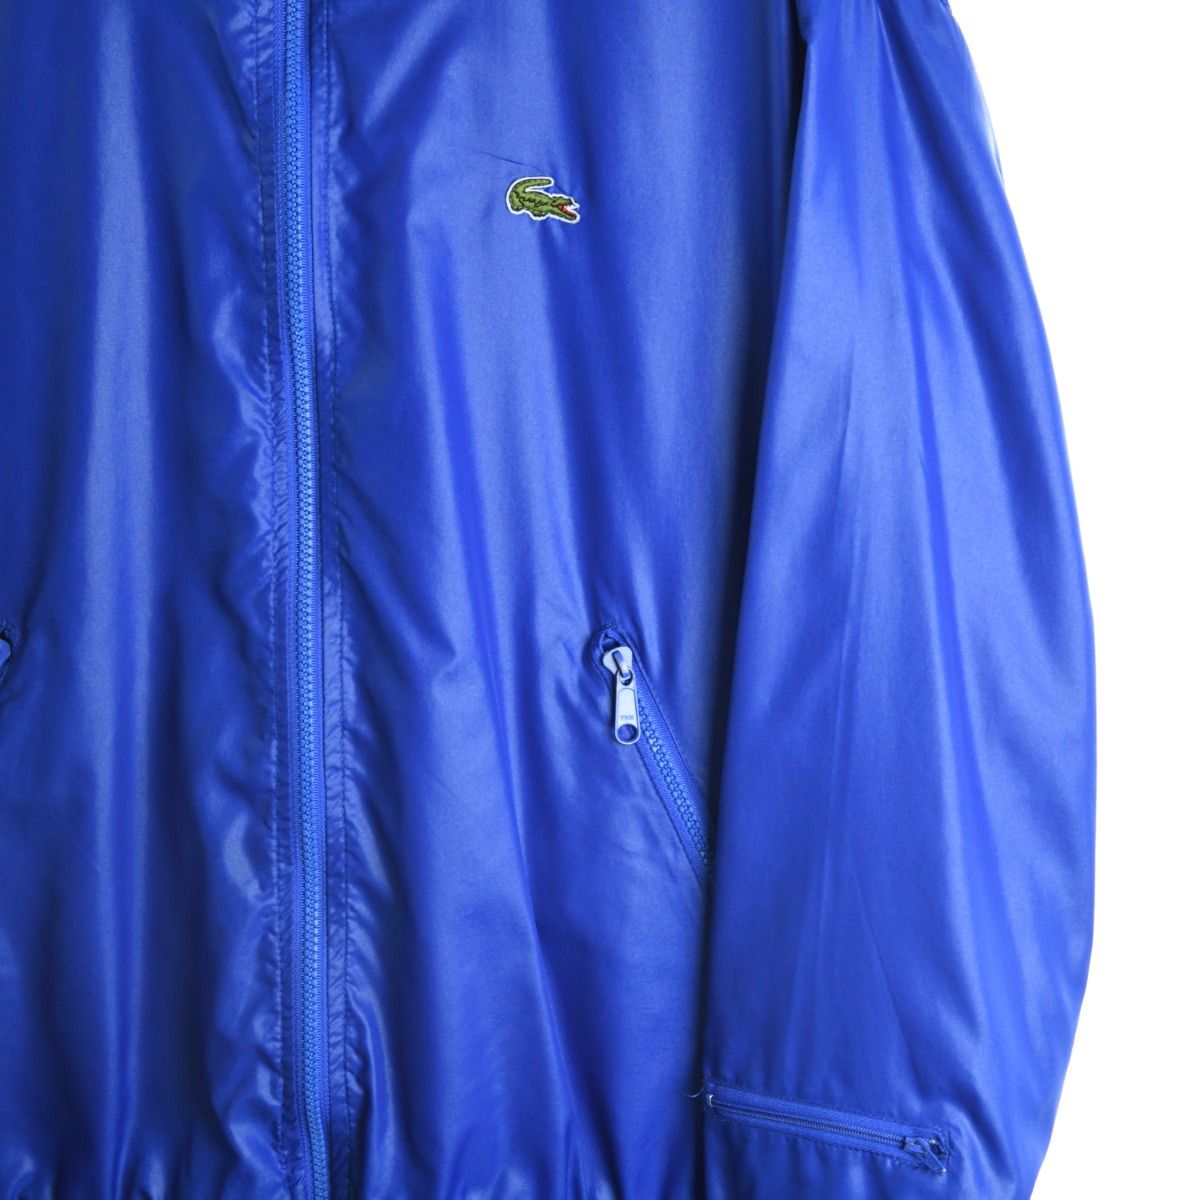 Lacoste IZOD 1980s Blue Shell Jacket